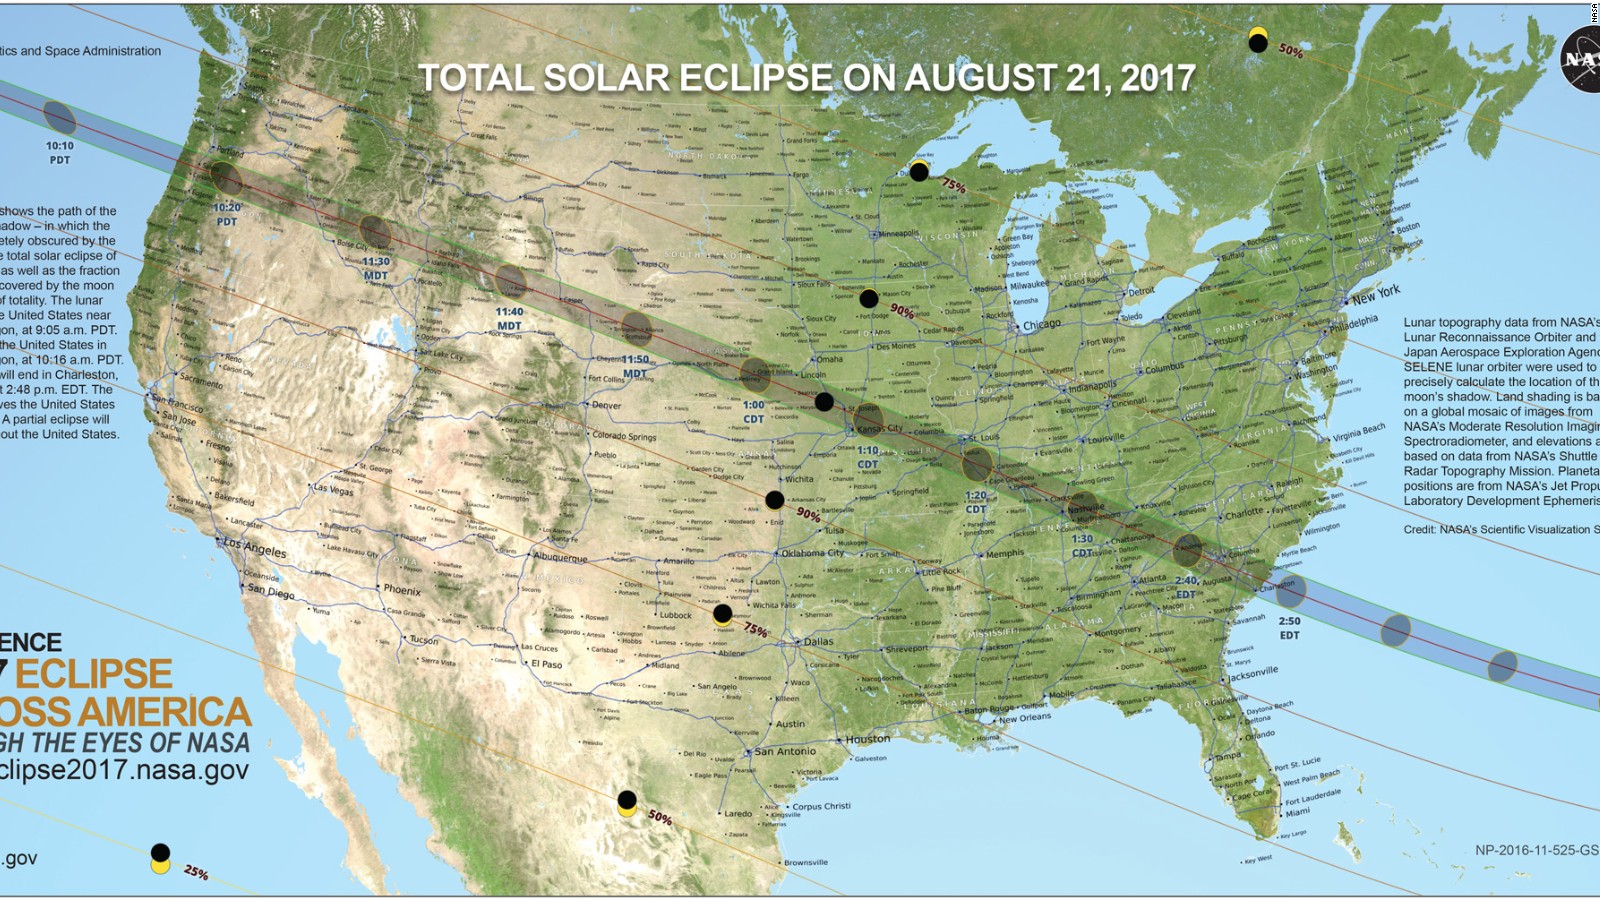 170316134800-great-american-eclipse-nasa-map-full-169.jpg